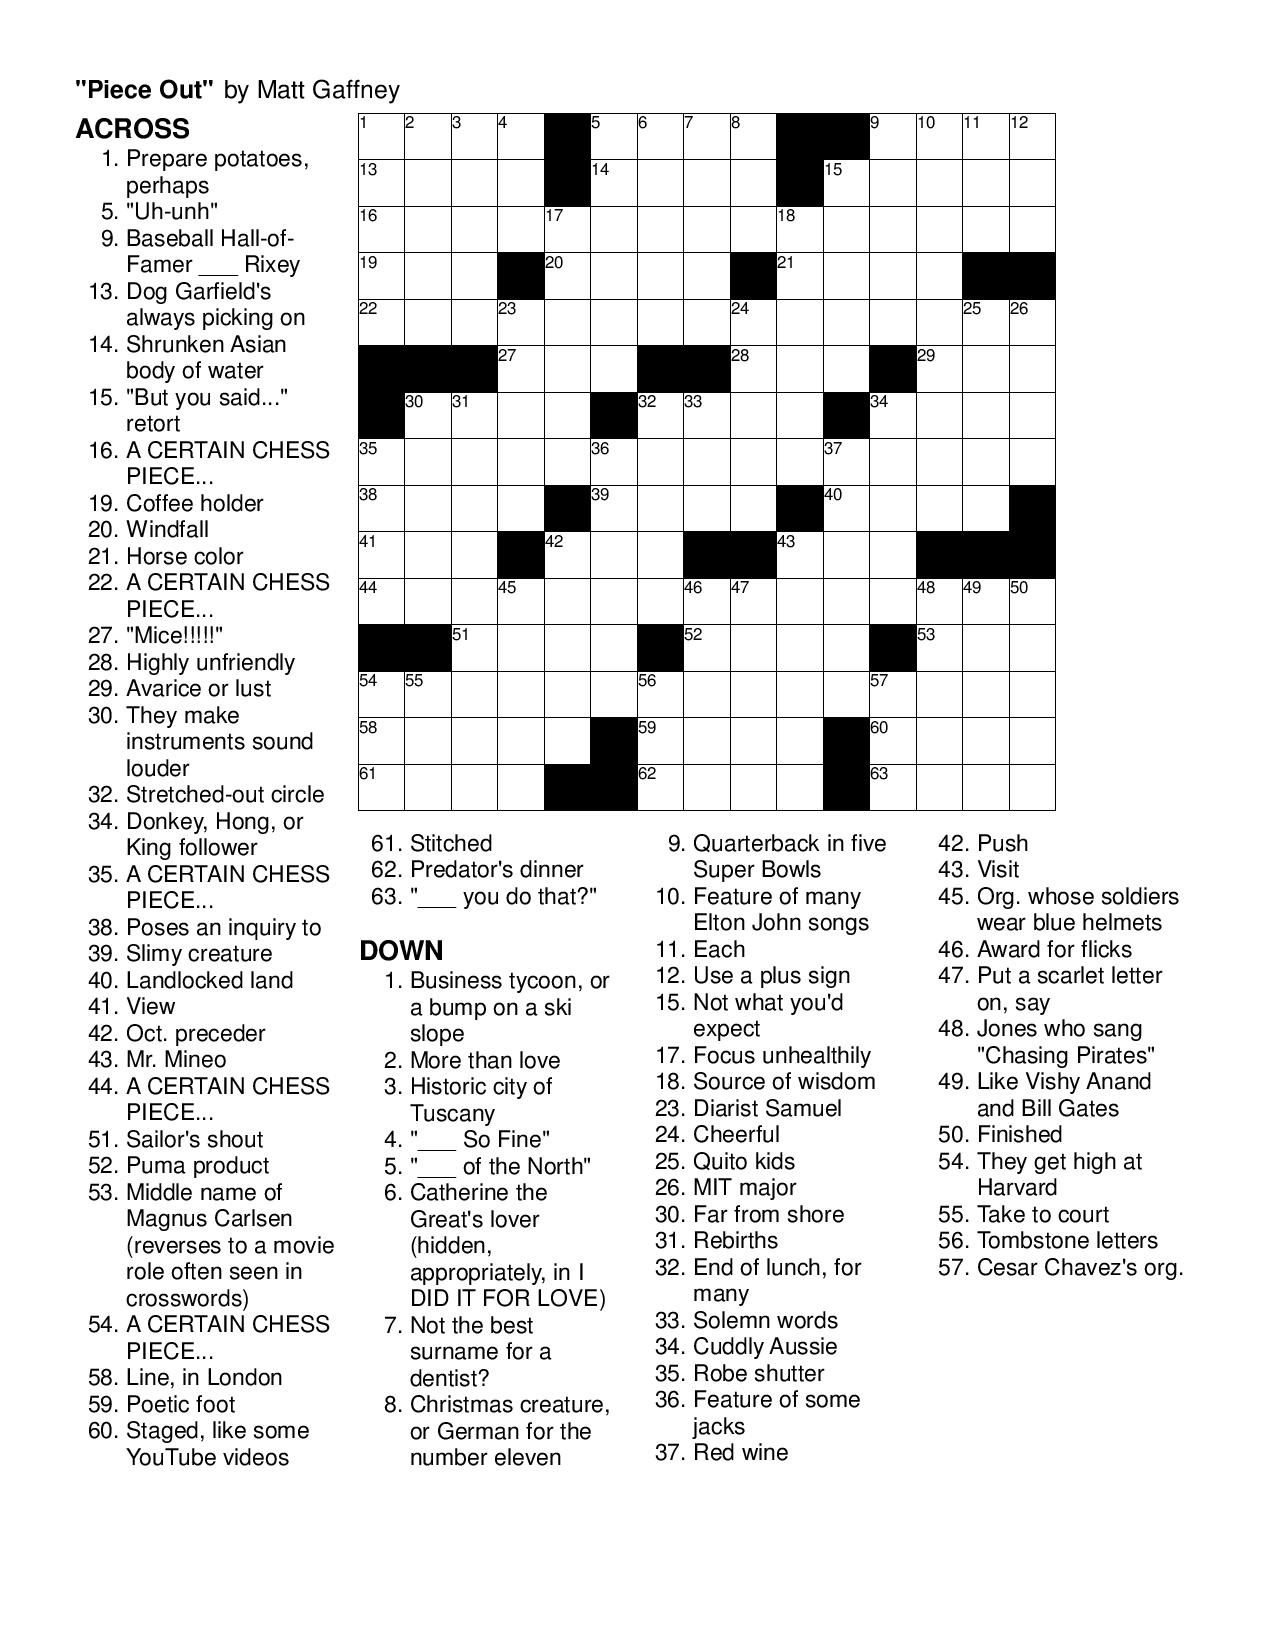 Merl Reagle s Sunday Crossword Free Printable Free Printable